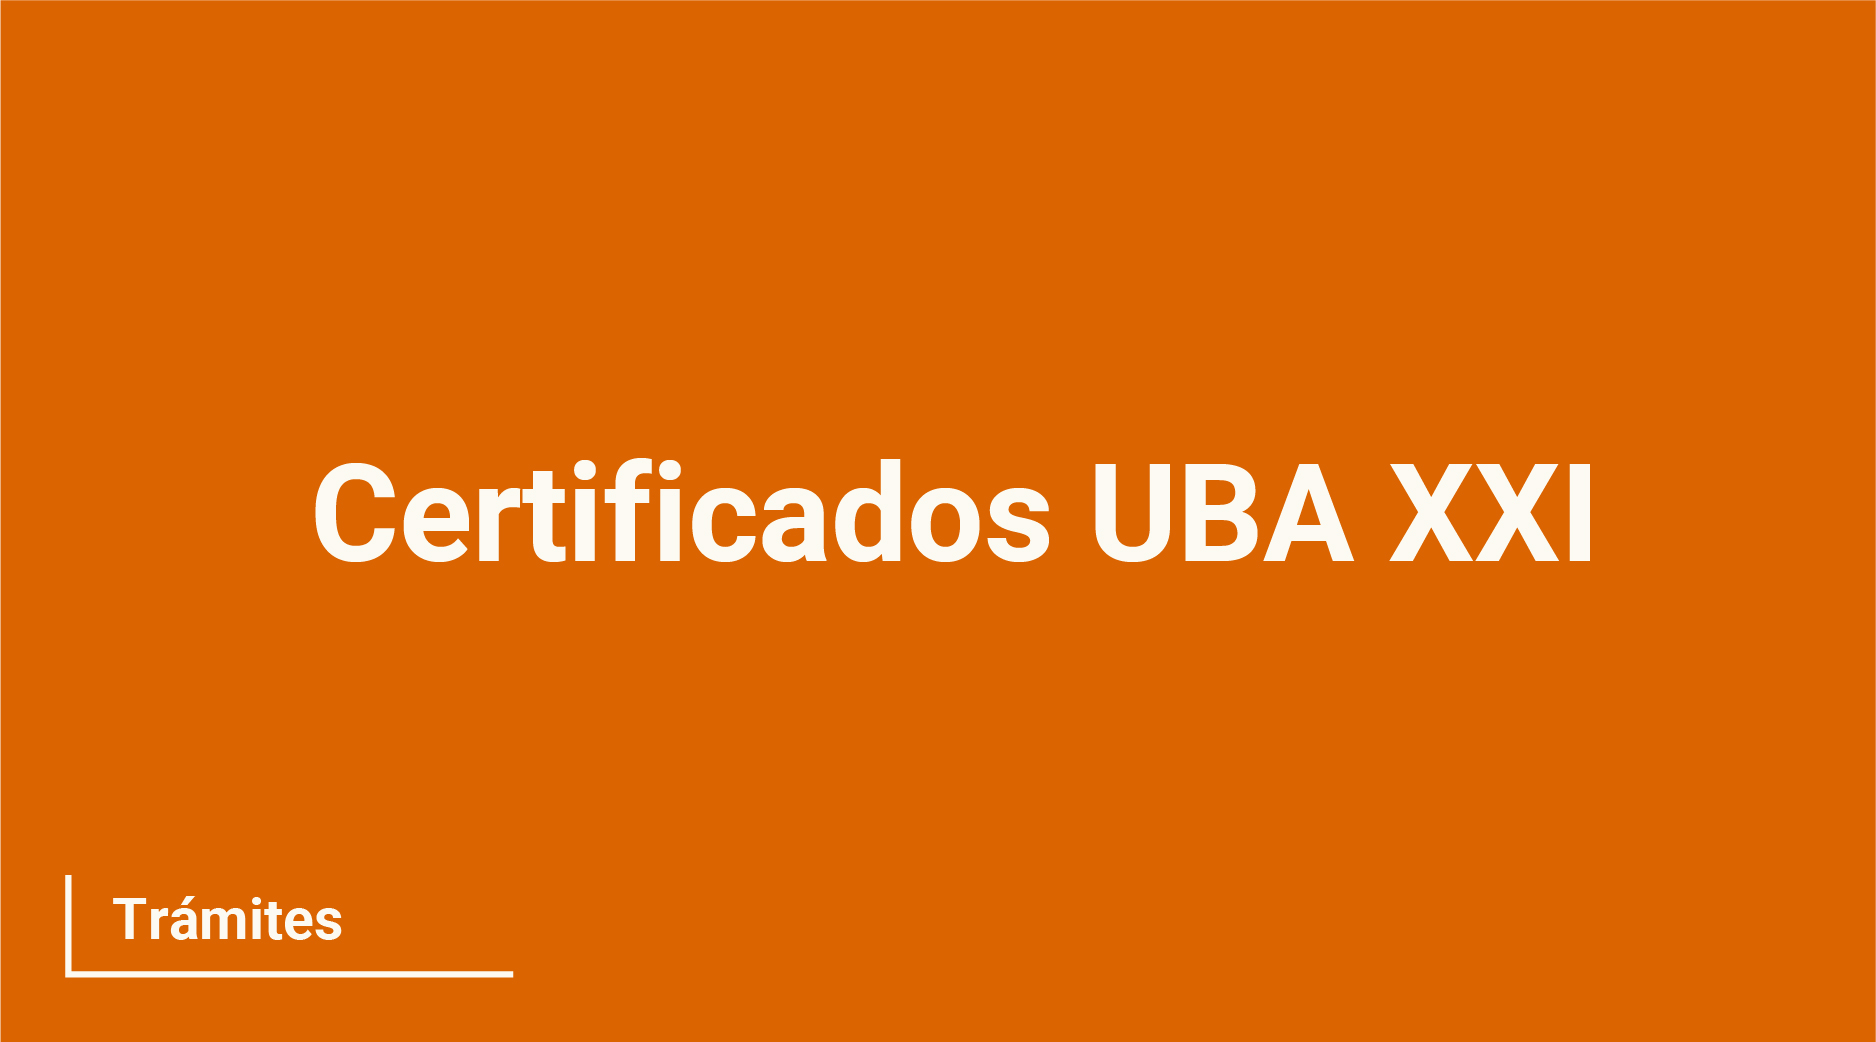 Certificados UBA XXI - ubaxxi